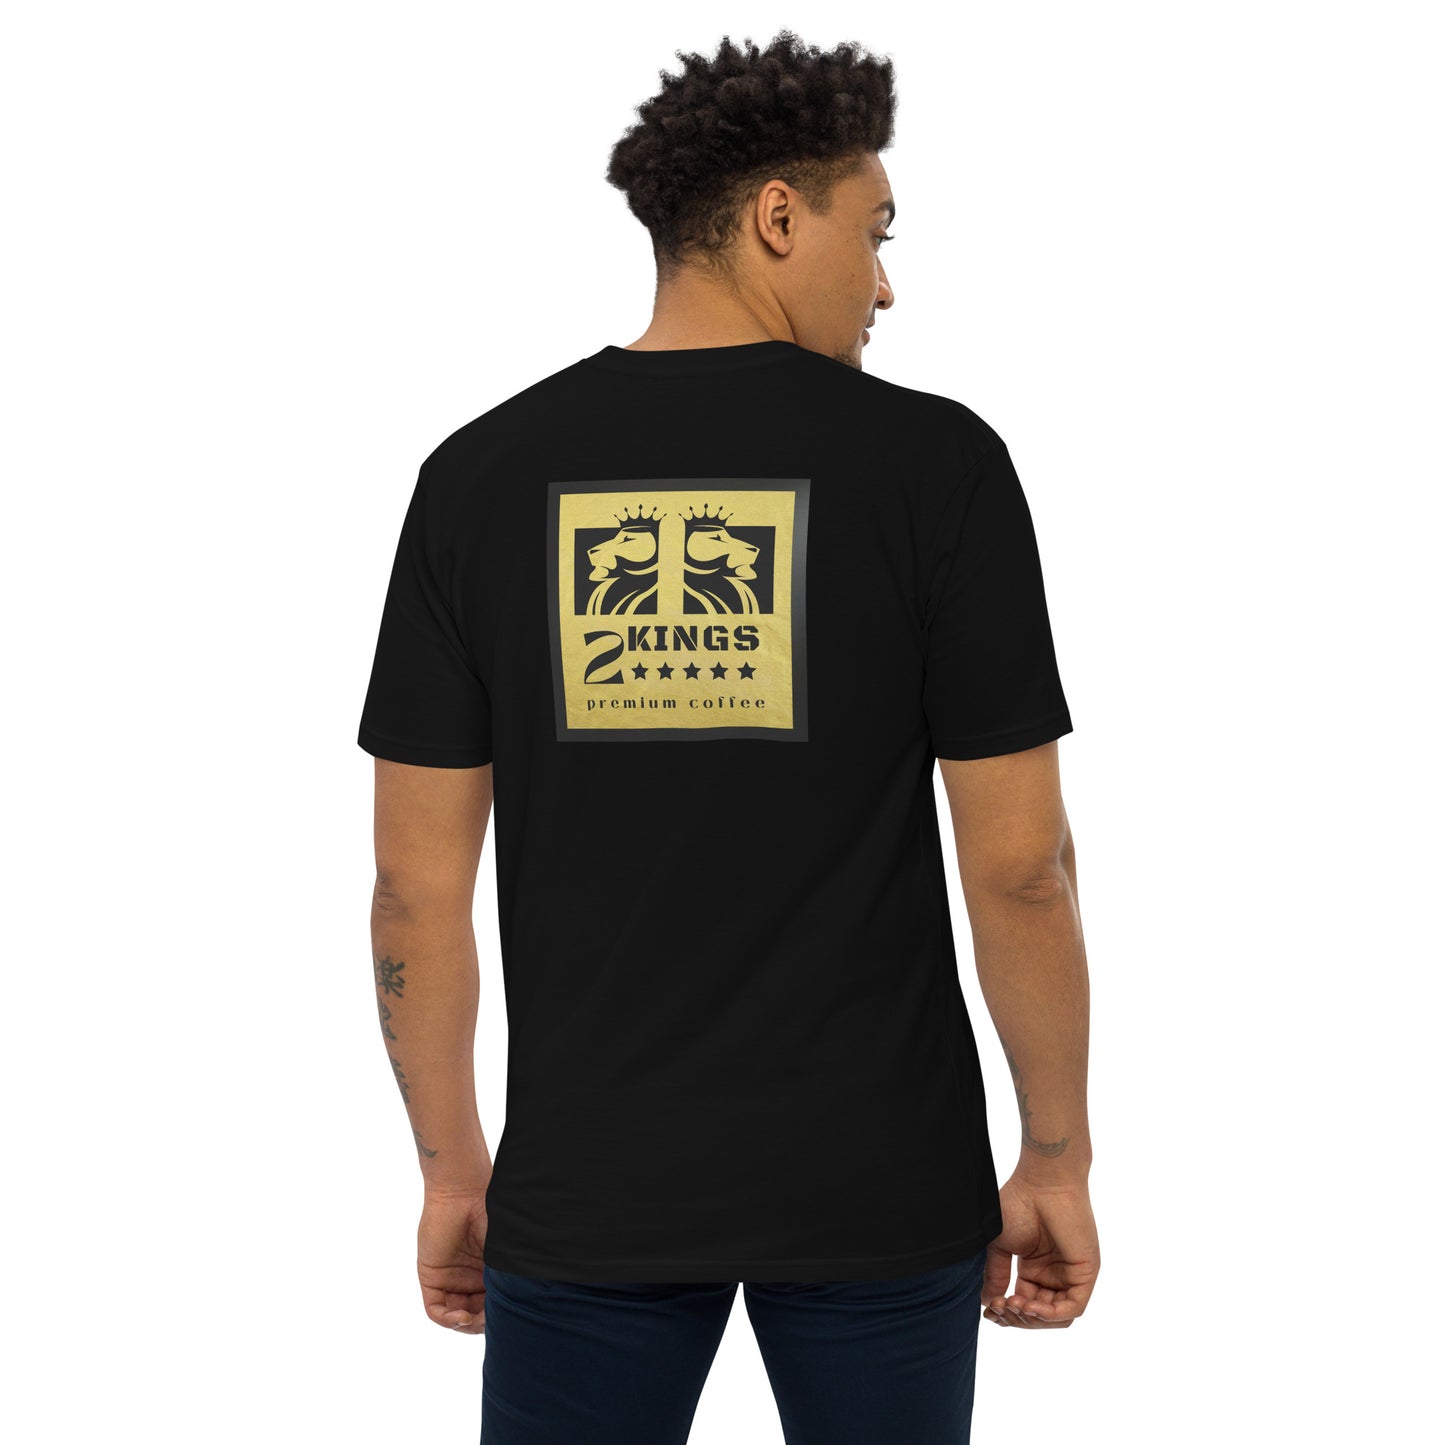 2 Kings Coffee - "My History is Strong" Premium Tshirt